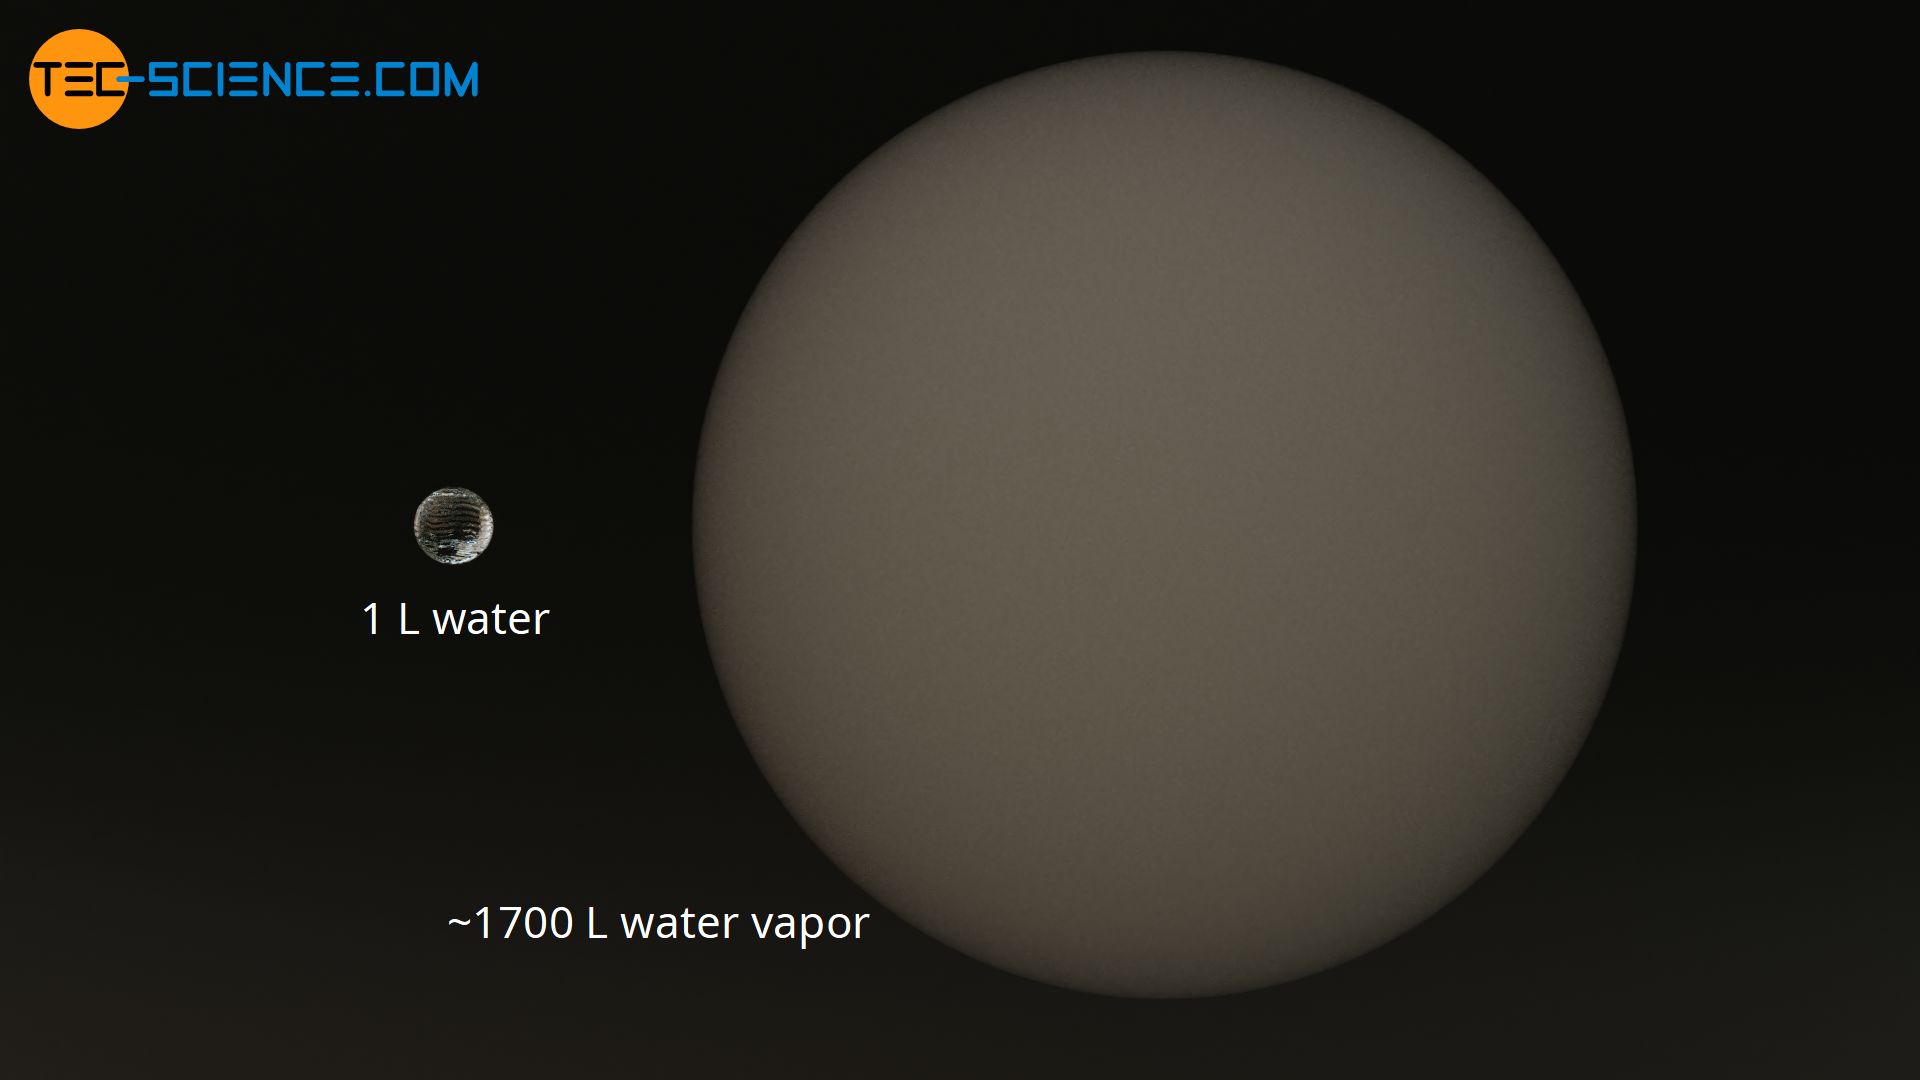 Comparison of volume between liquid water and gaseous water (water vapor)